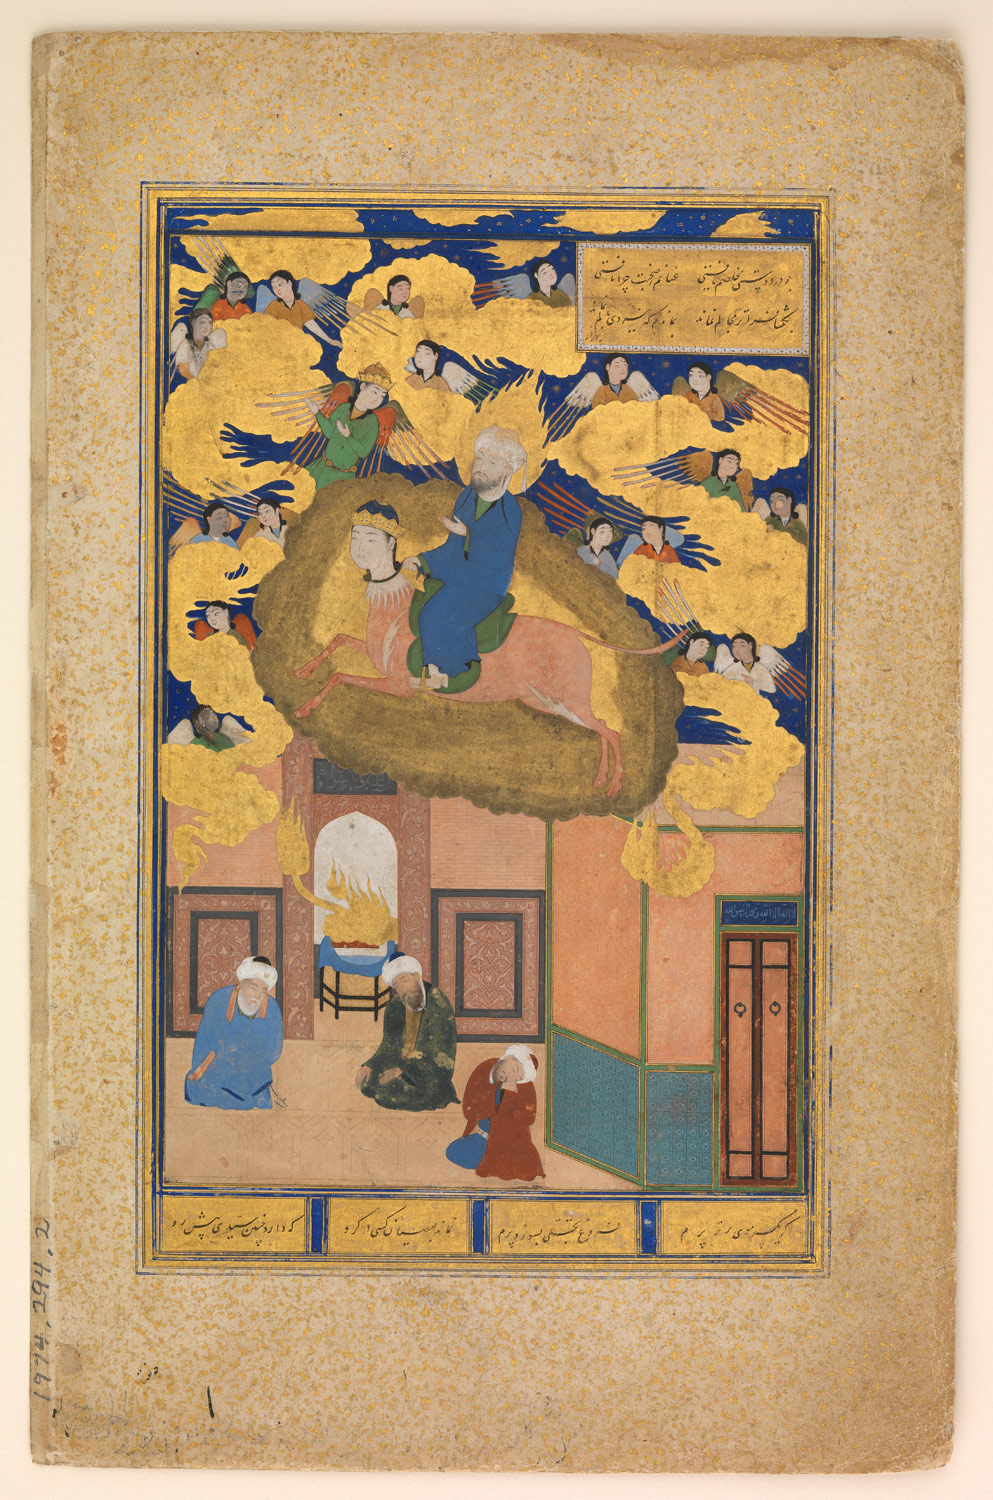 The Miraj, or, The Night Flight of Muhammad on his Steed Buraq: Folio from a Bustan of Sadi